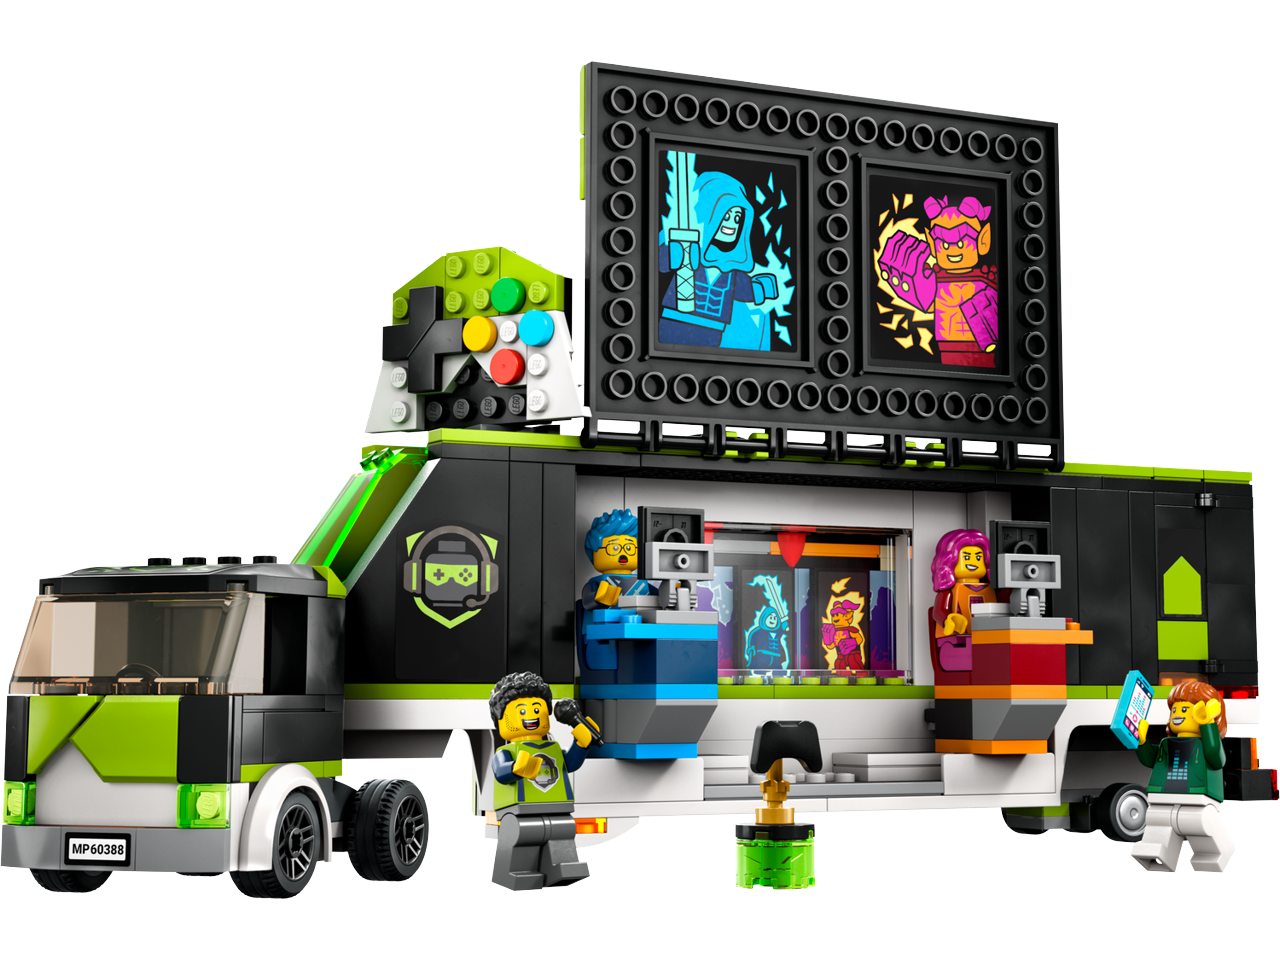 LEGO City – Gaming-Turnier-Truck (60388) 